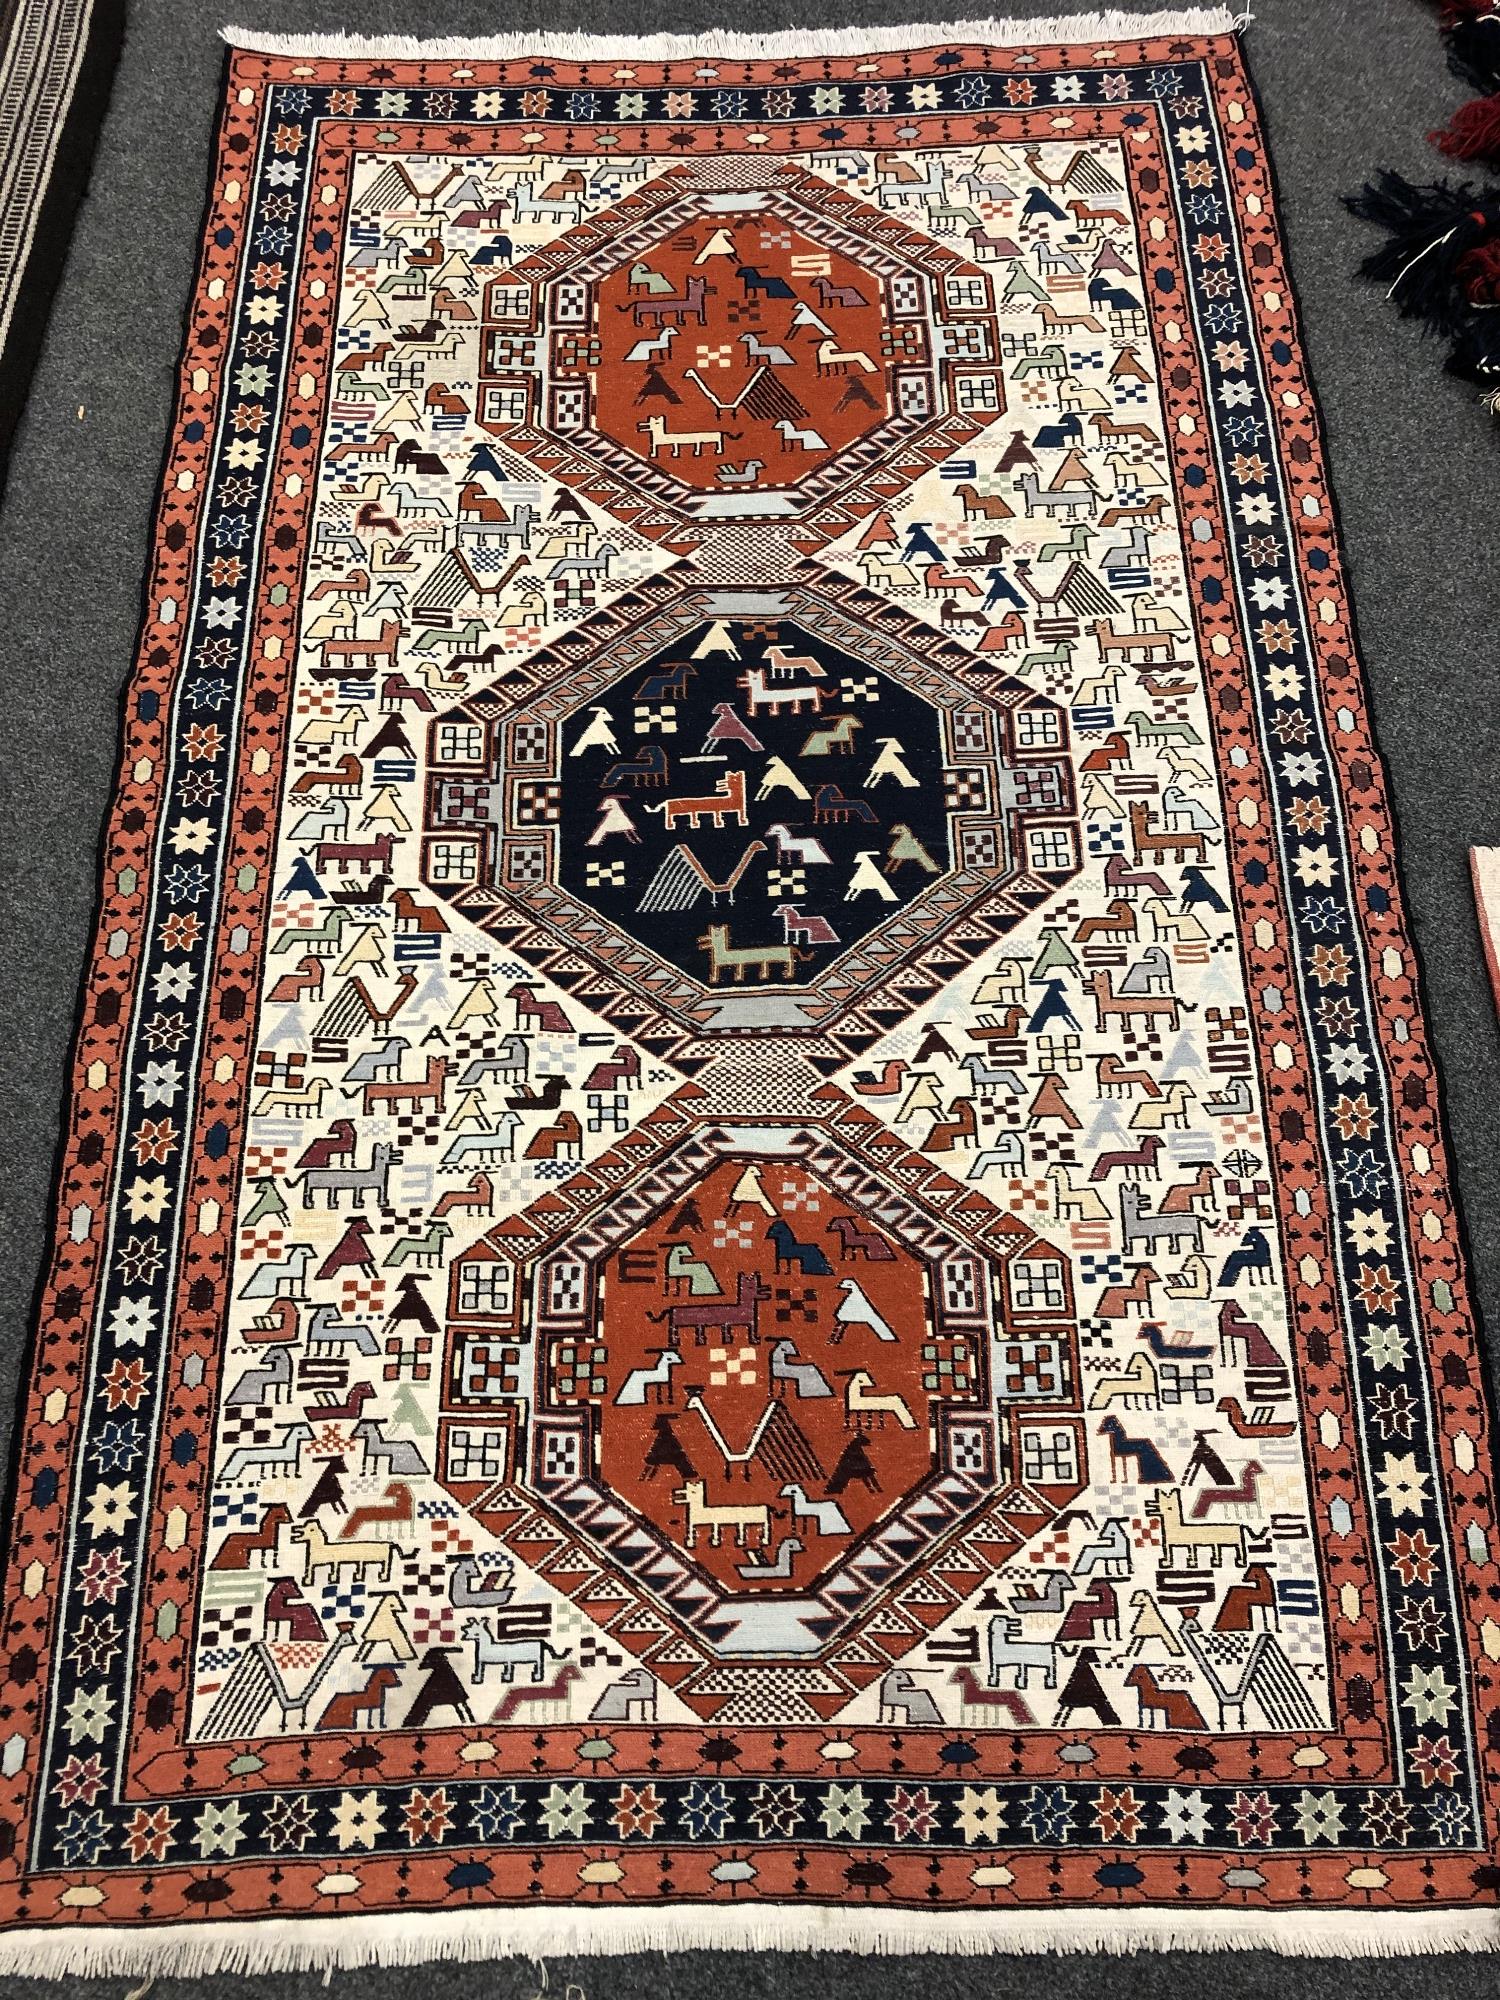 A Caucasian Afshar rug of zoomorphic design,